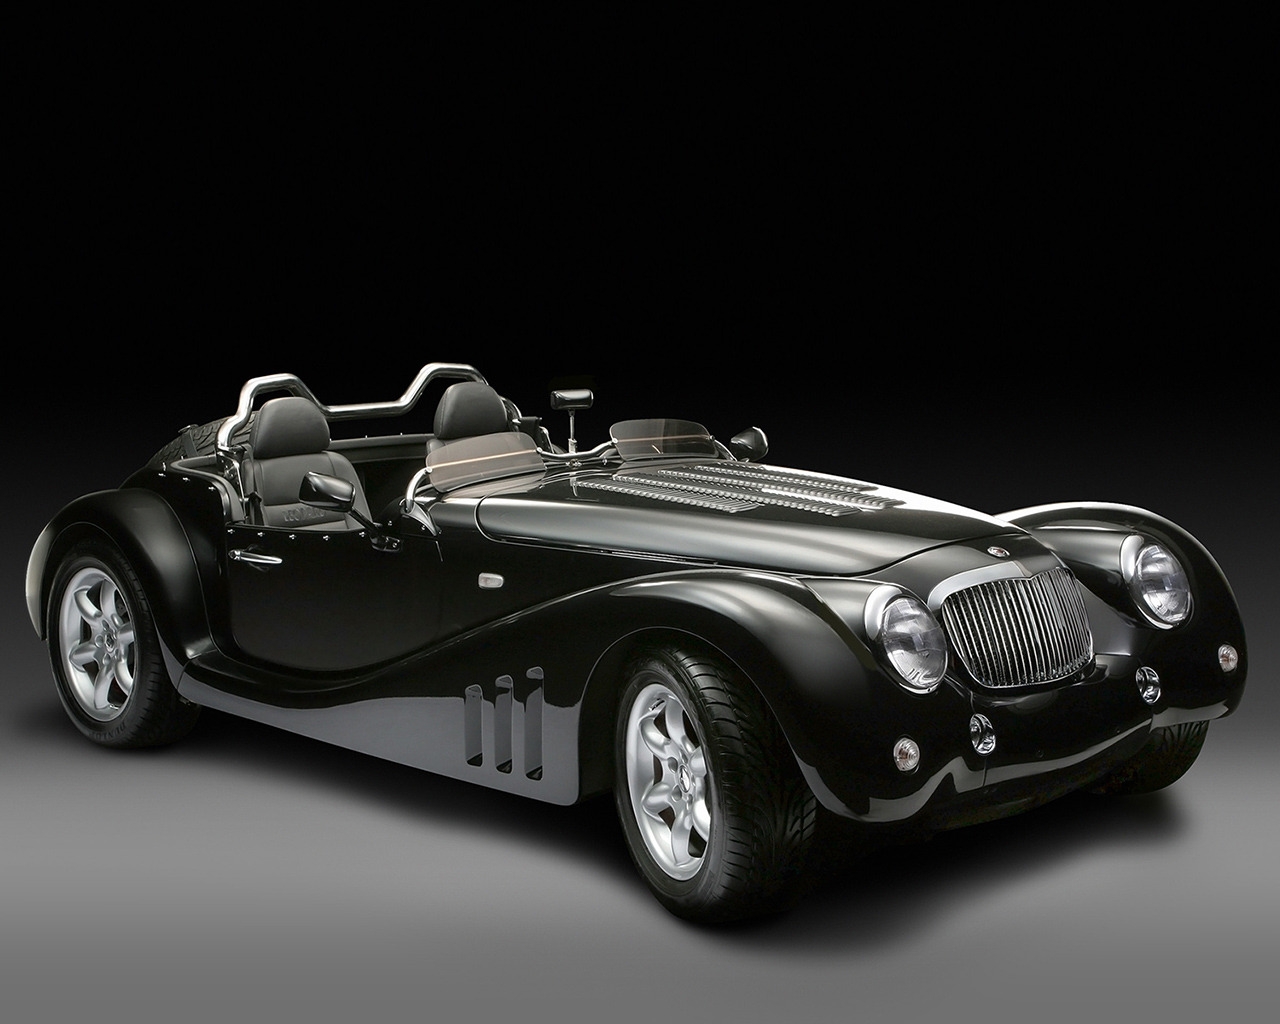 2013 Leopard Roadster Studio for 1280 x 1024 resolution